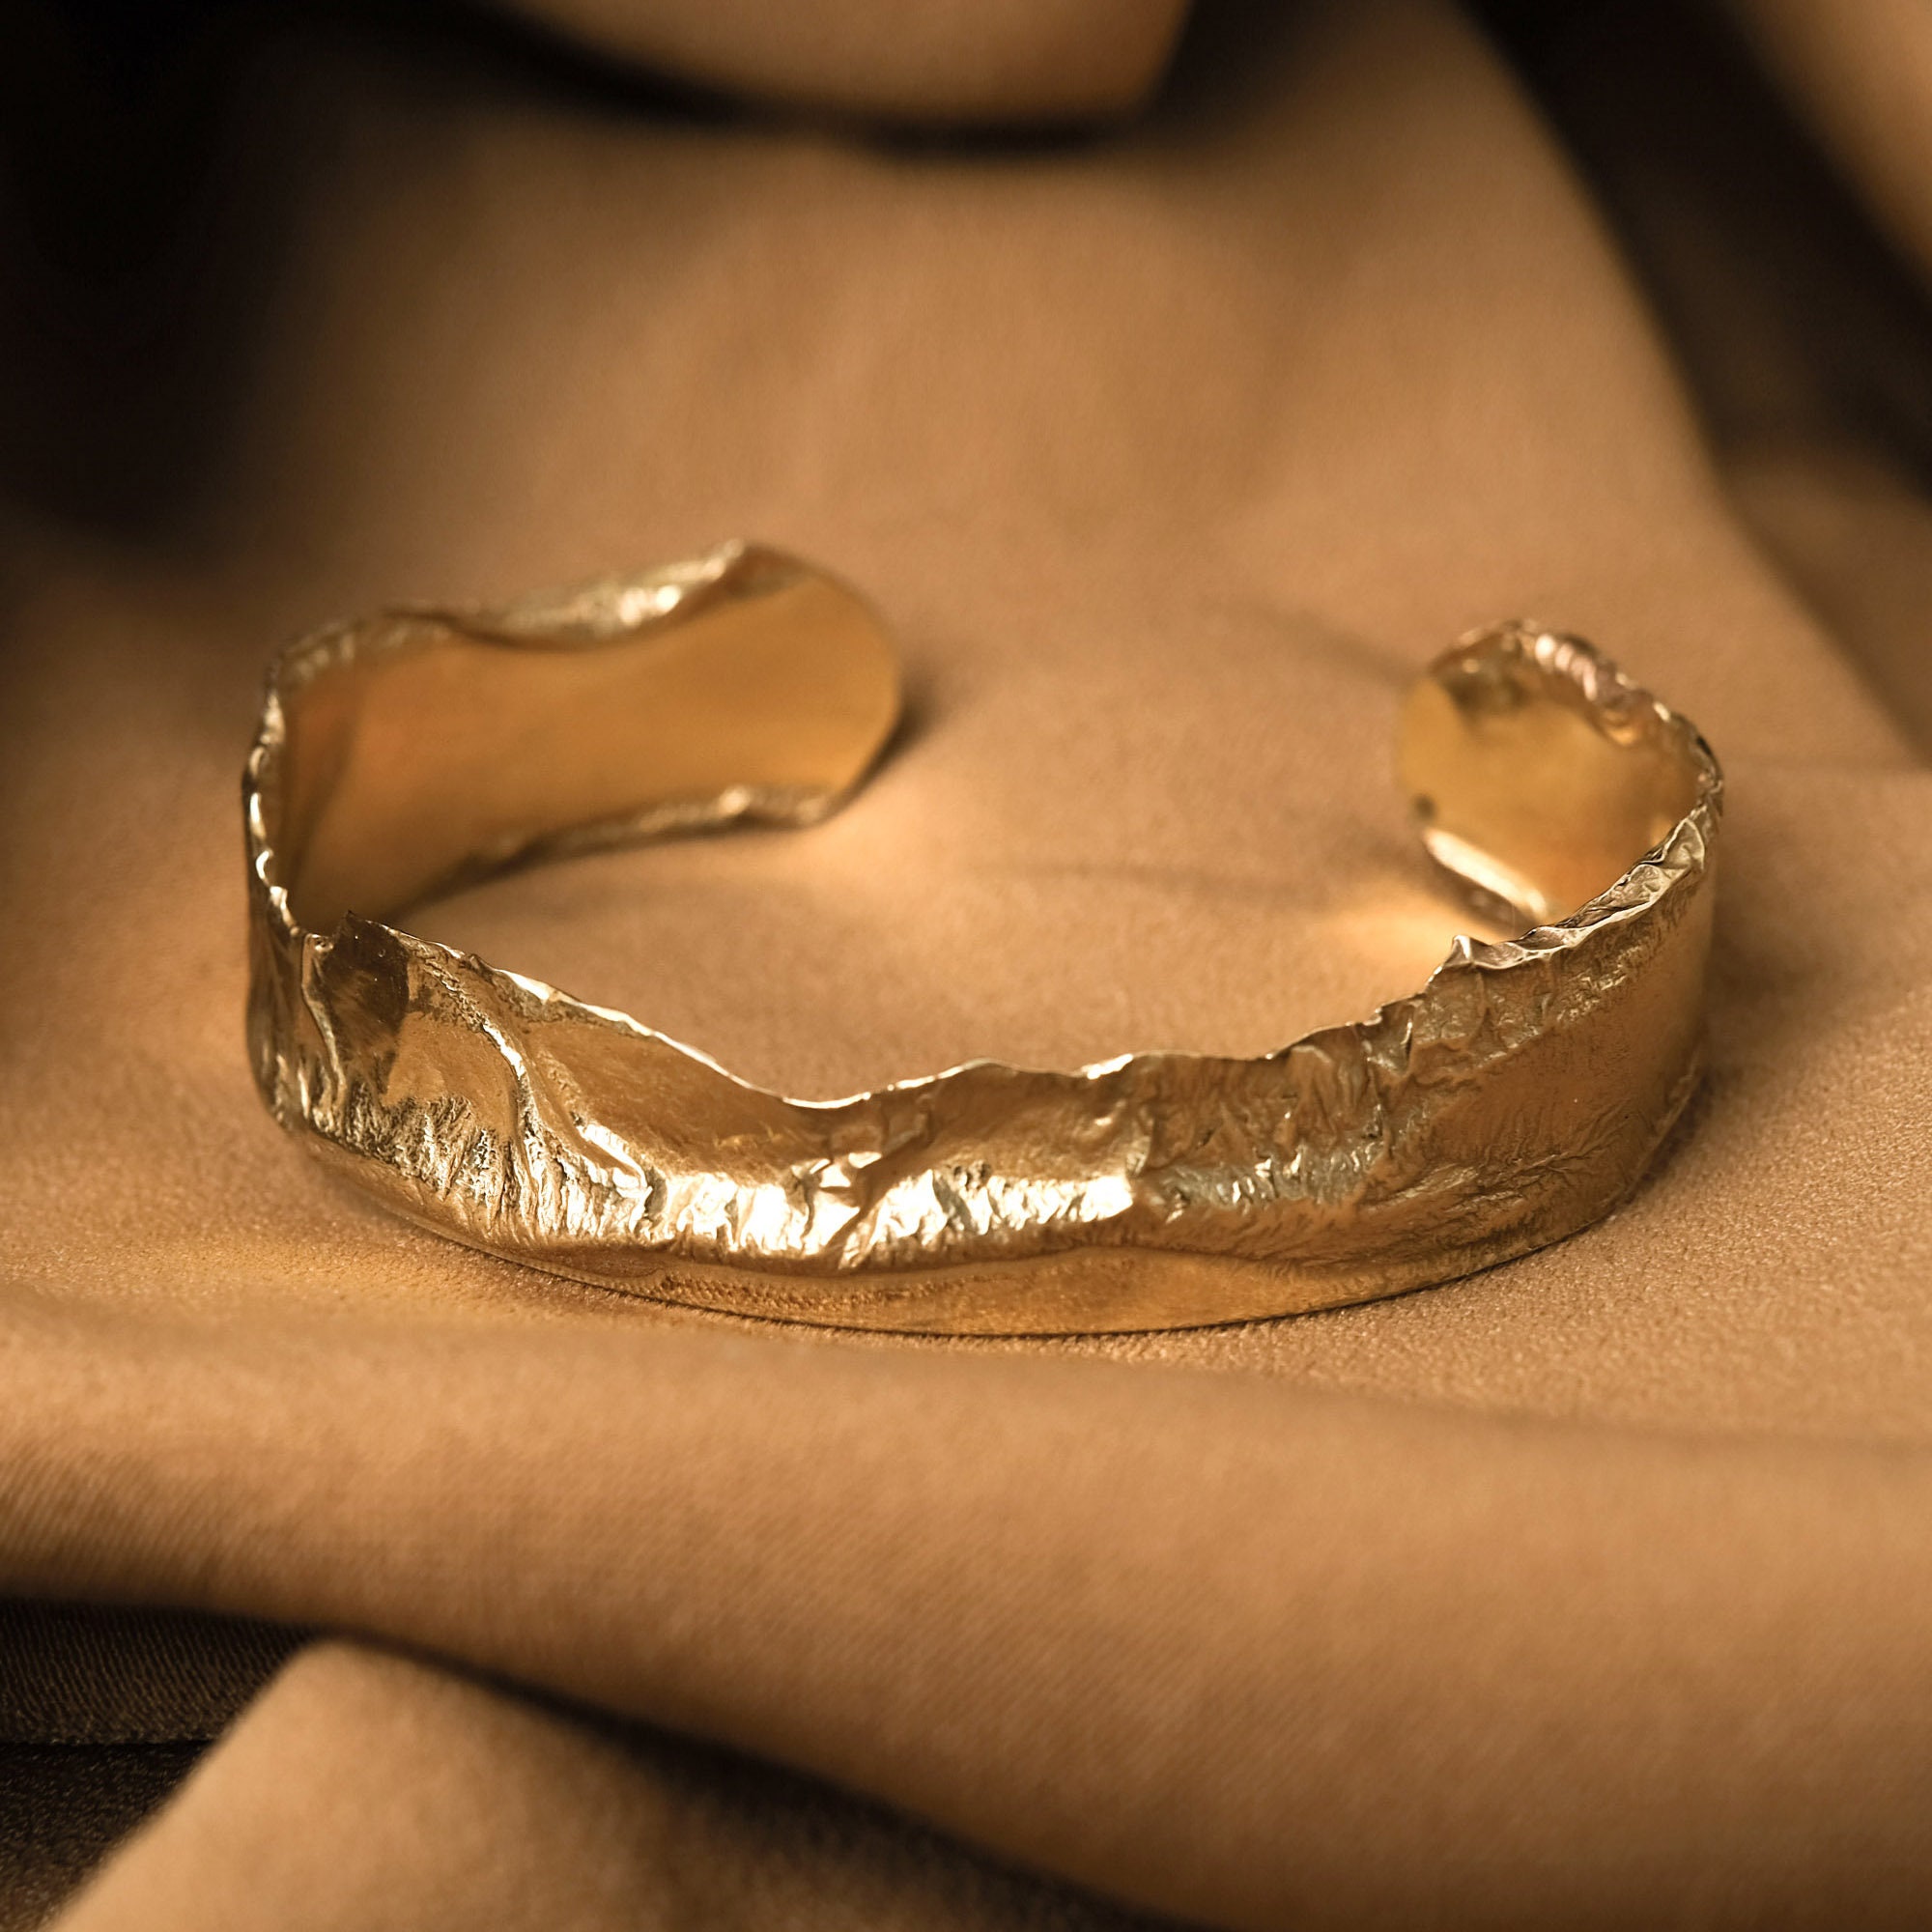 Solid Gold Cuff Bracelet 14k Gold Organic Bangle 